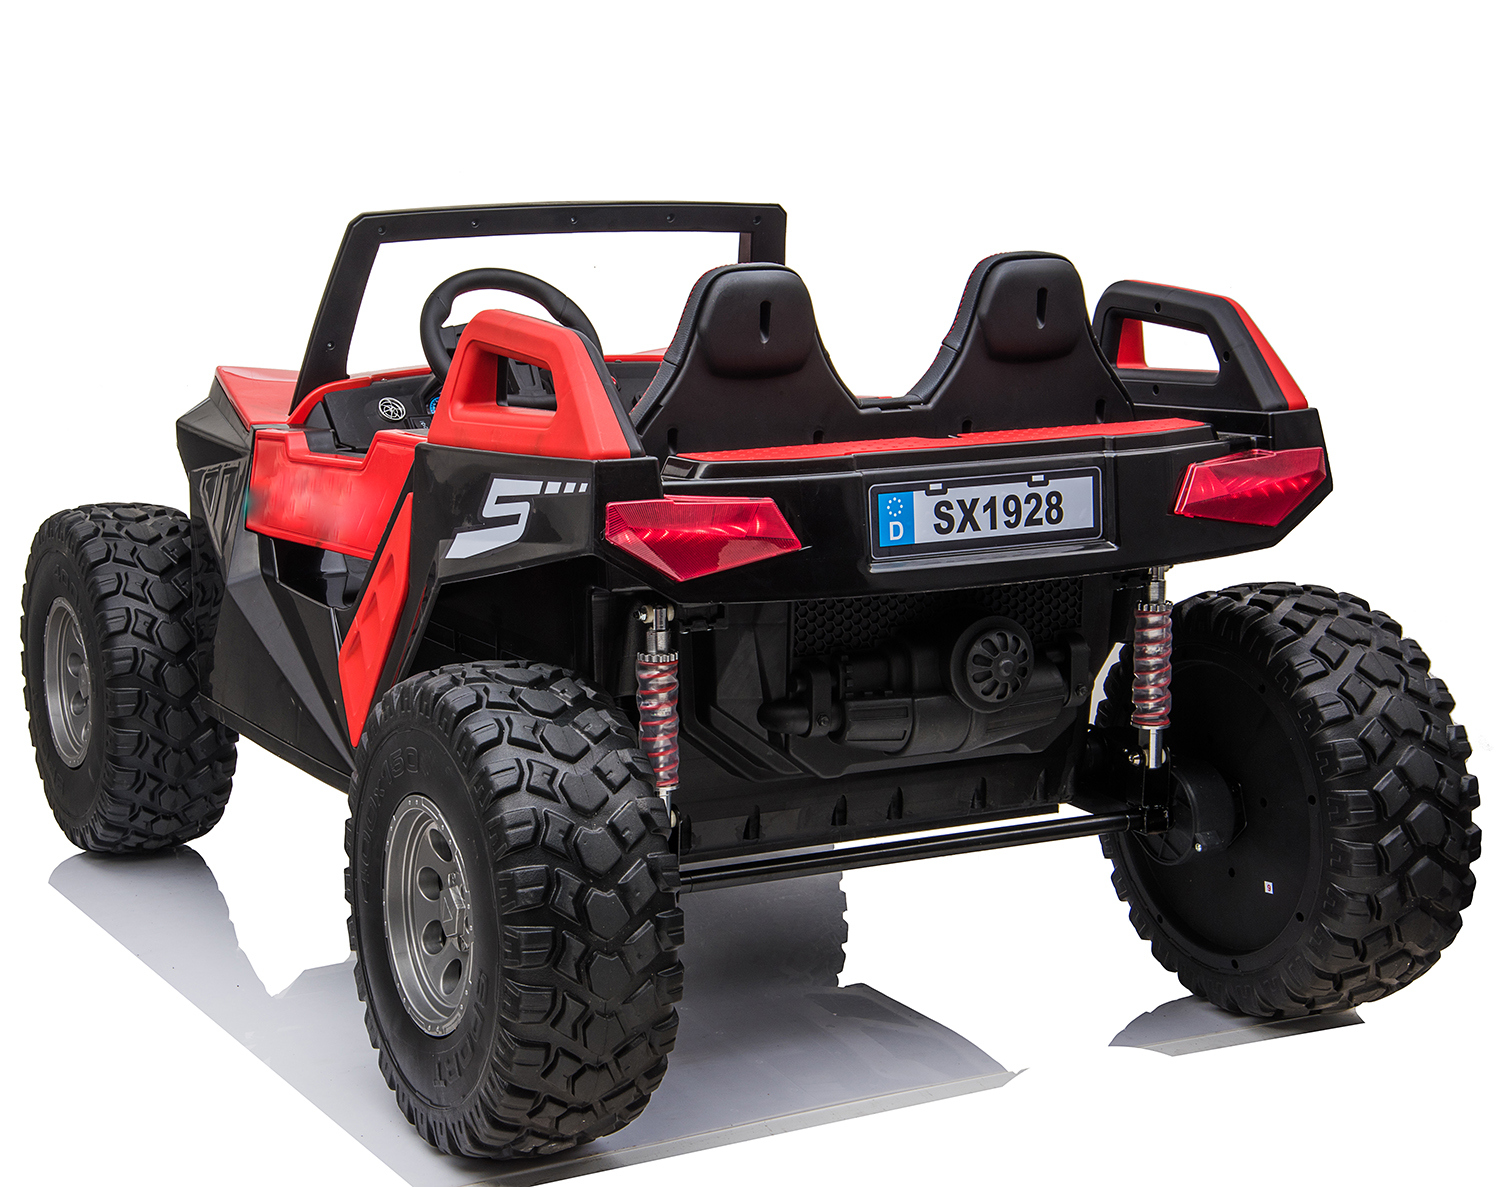 XL 4X4 UTV Dune Buggy 2 Seats 24V Kids Ride On Car With ...